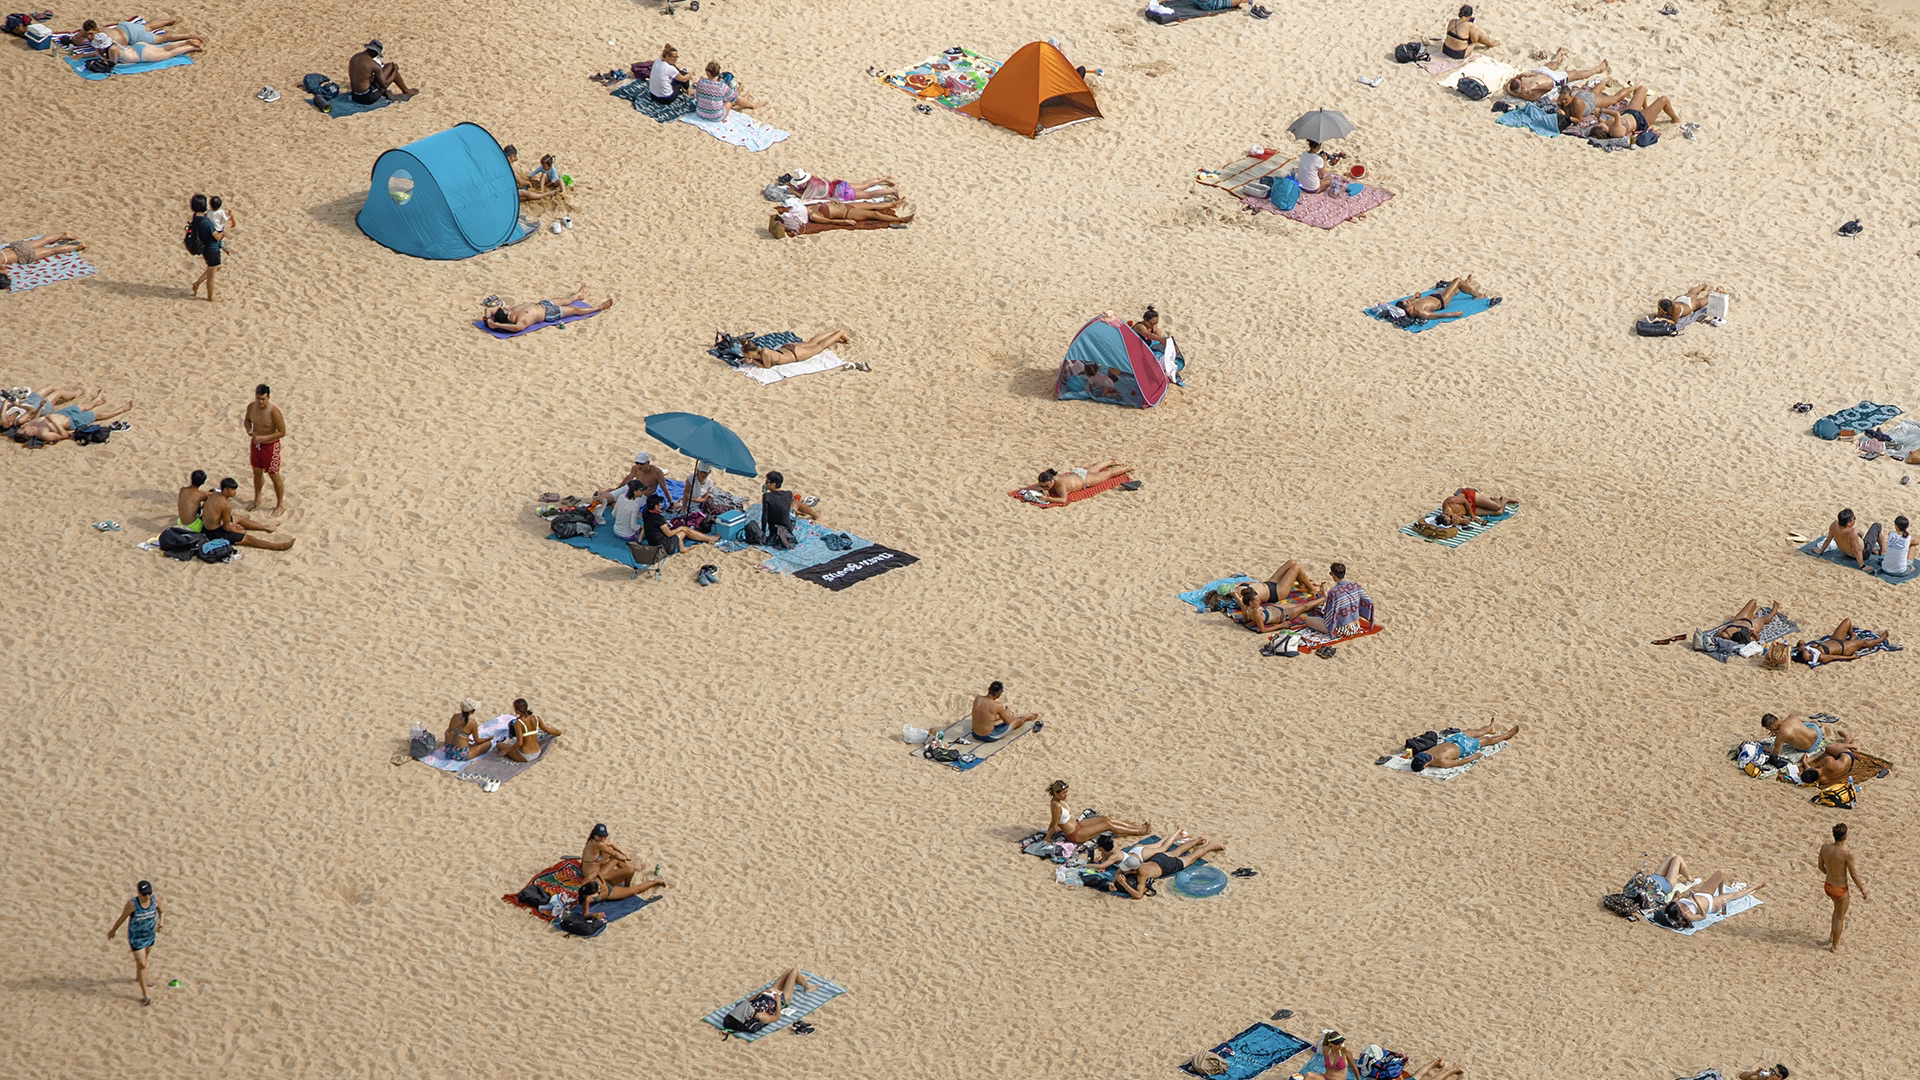 Lifes a beach: 17 photos that capture the spirit of summer